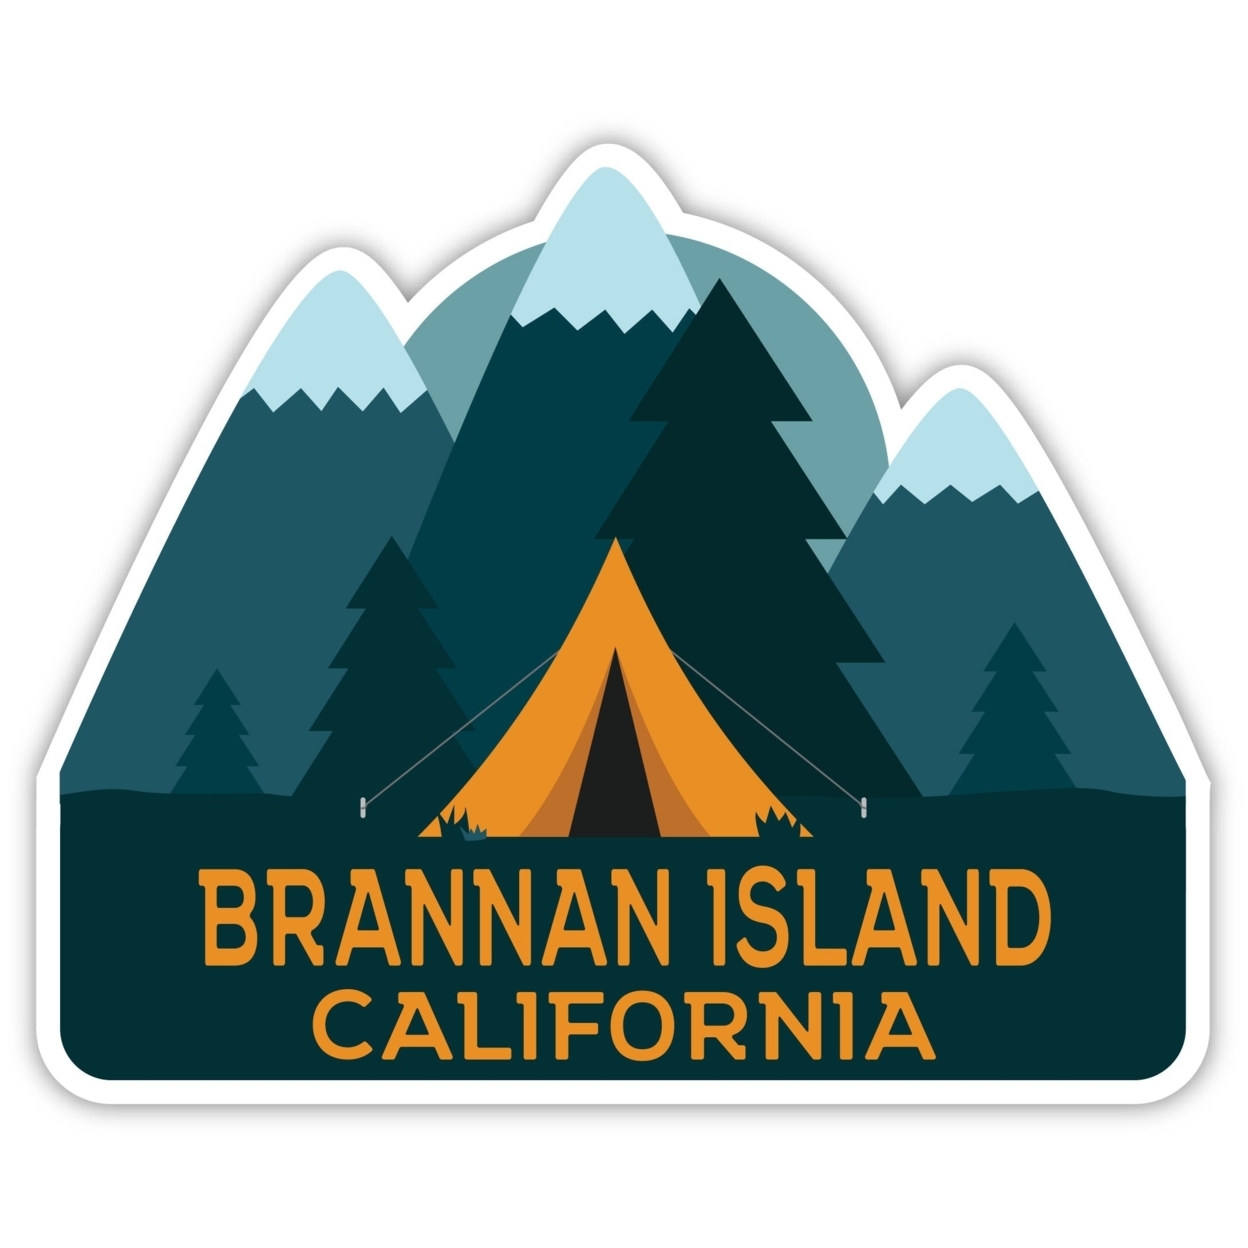 Brannan Island California Souvenir Decorative Stickers (Choose Theme And Size) - Single Unit, 2-Inch, Adventures Awaits